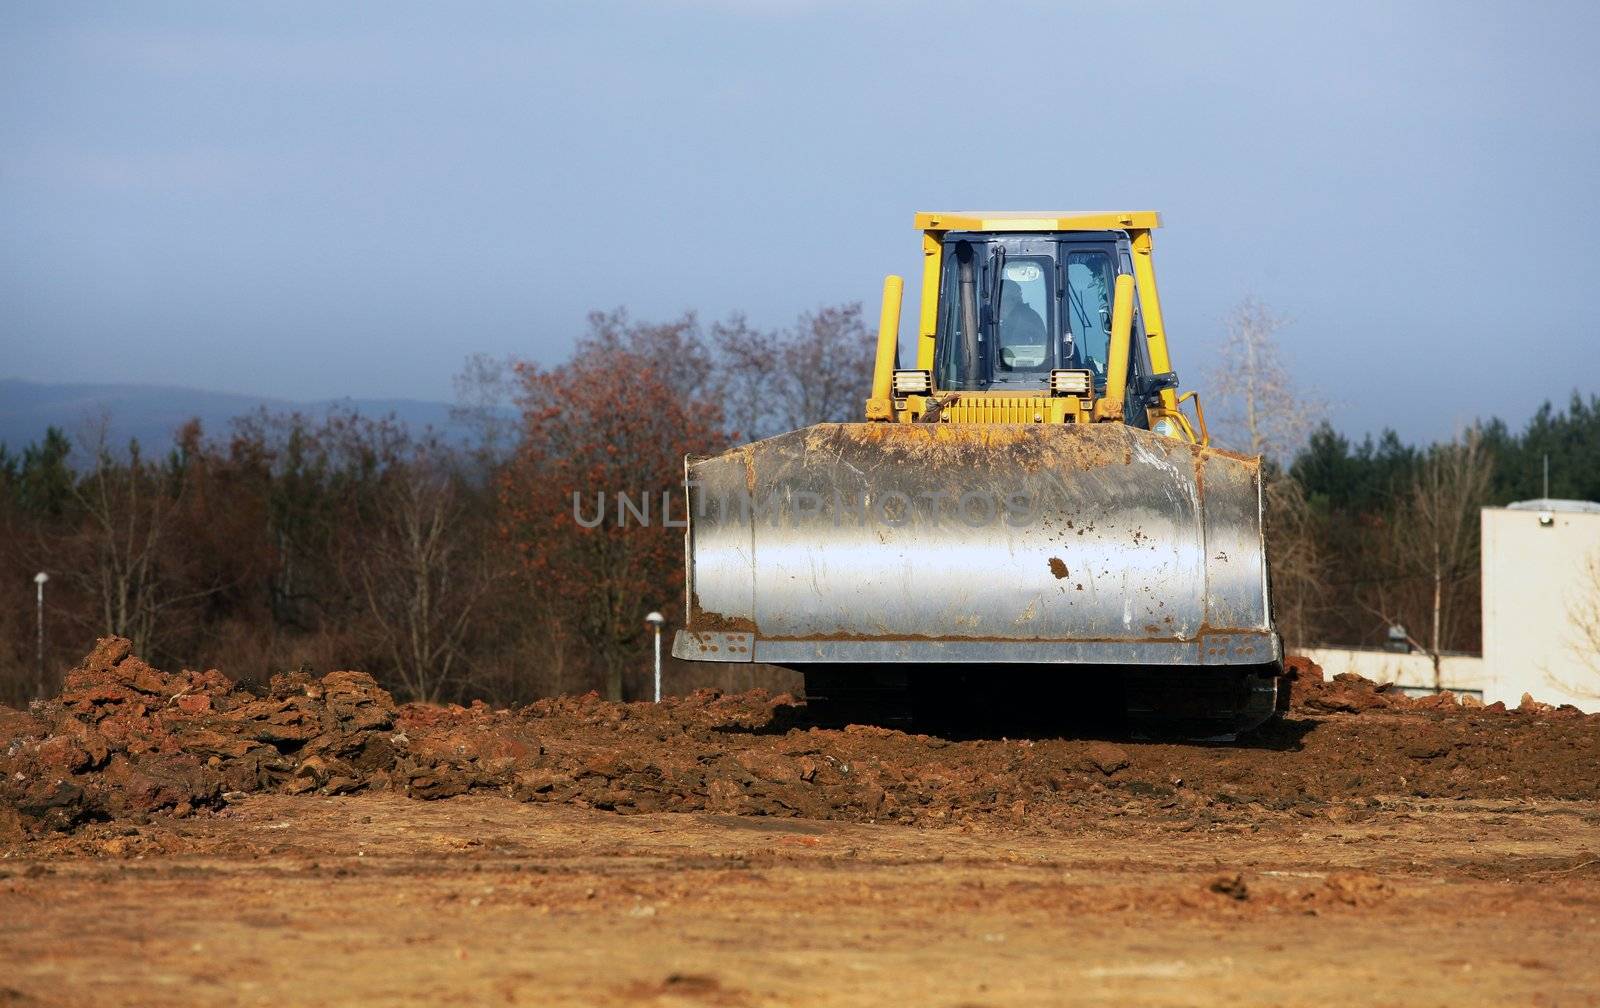 Yellow excavator by haak78